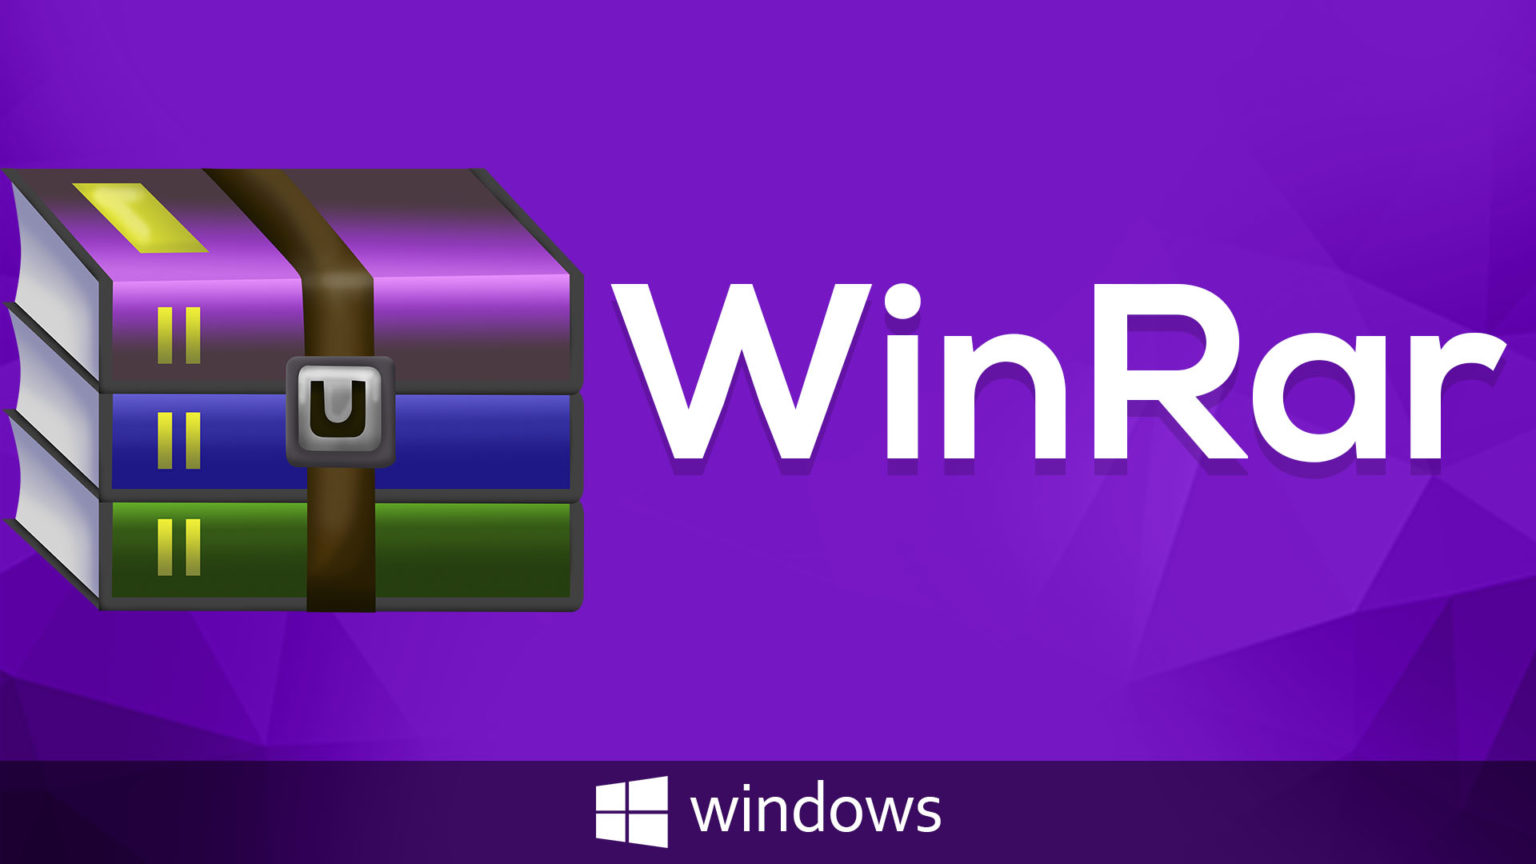 winrar software for windows 10 64 bit free download